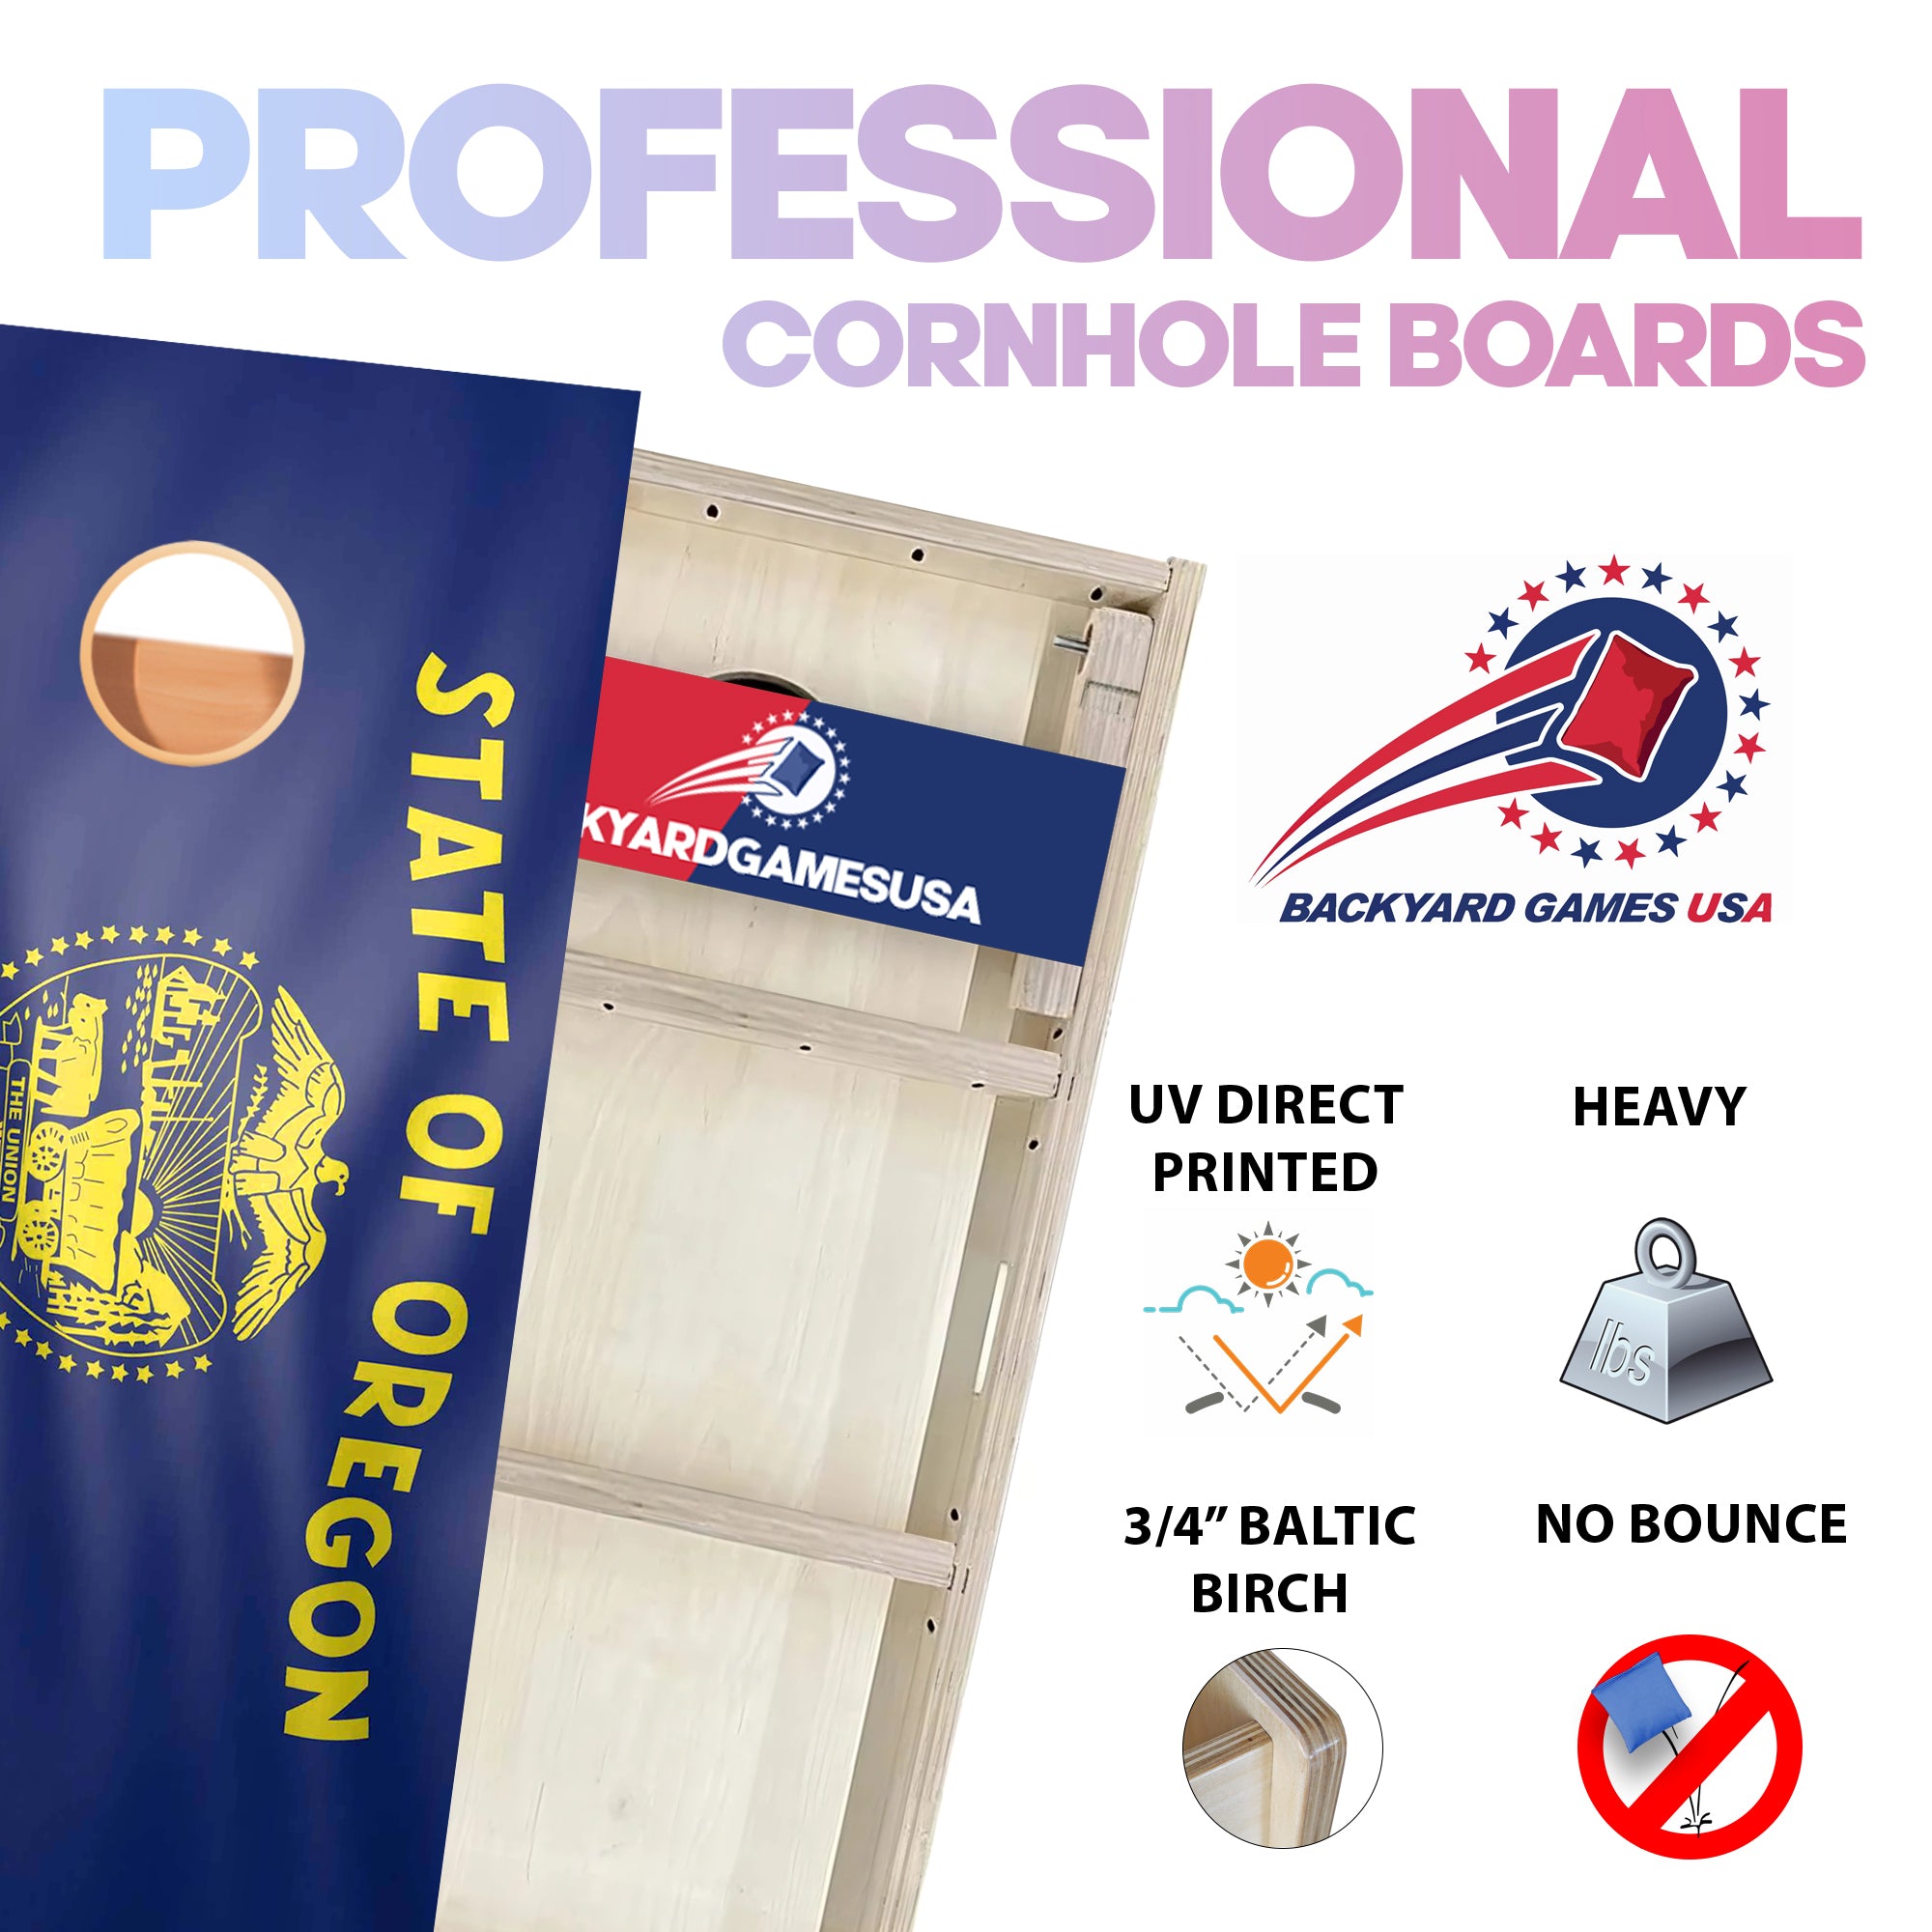 Oregon Professional Cornhole Boards